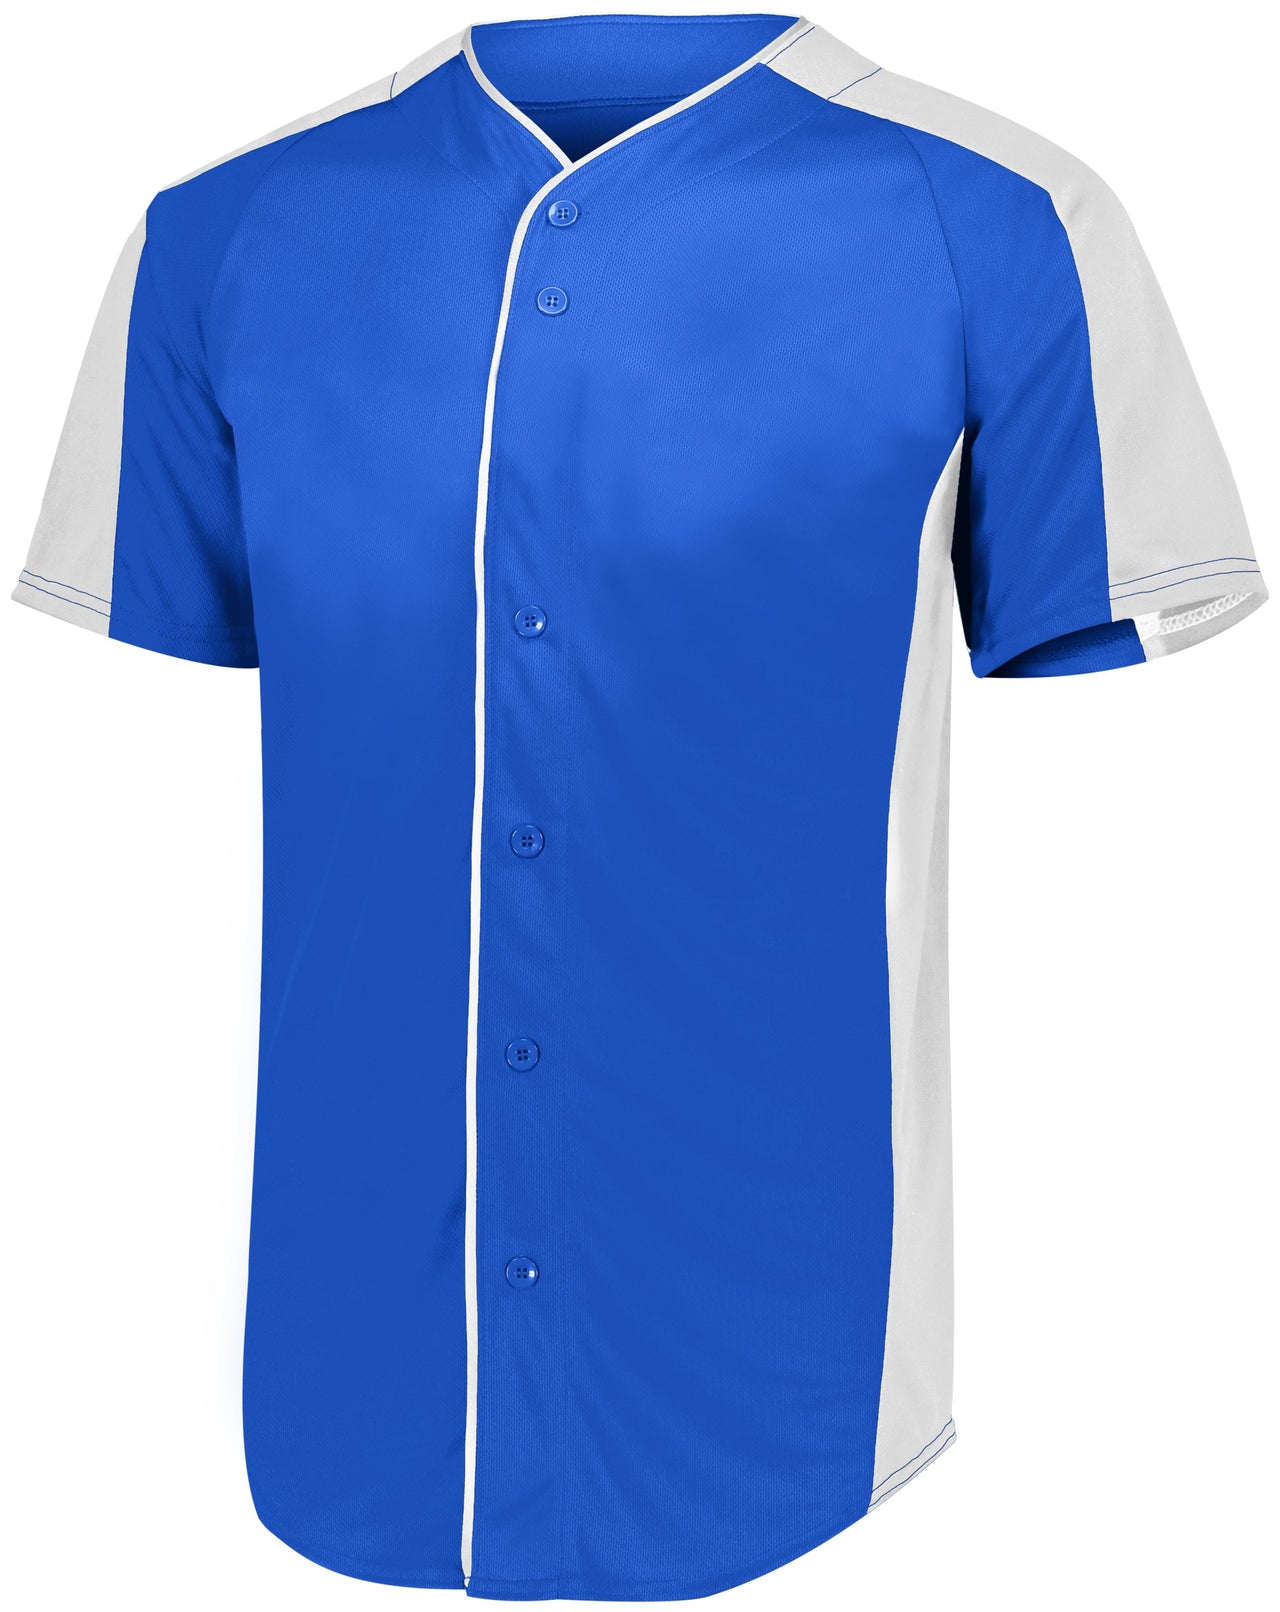 Full-Button Baseball Jersey - 1655